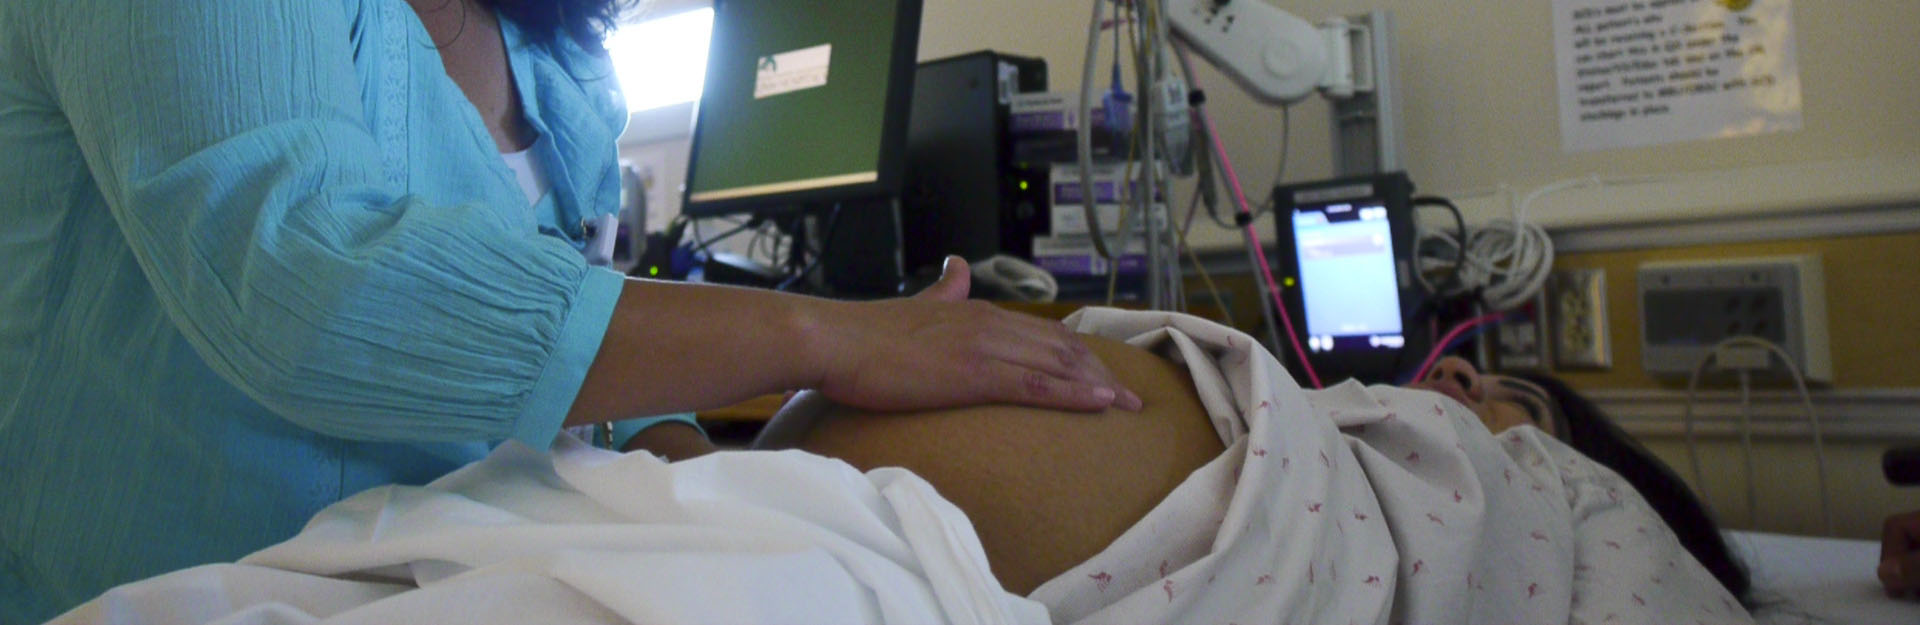 A provider examining a pregnant person's abdomen